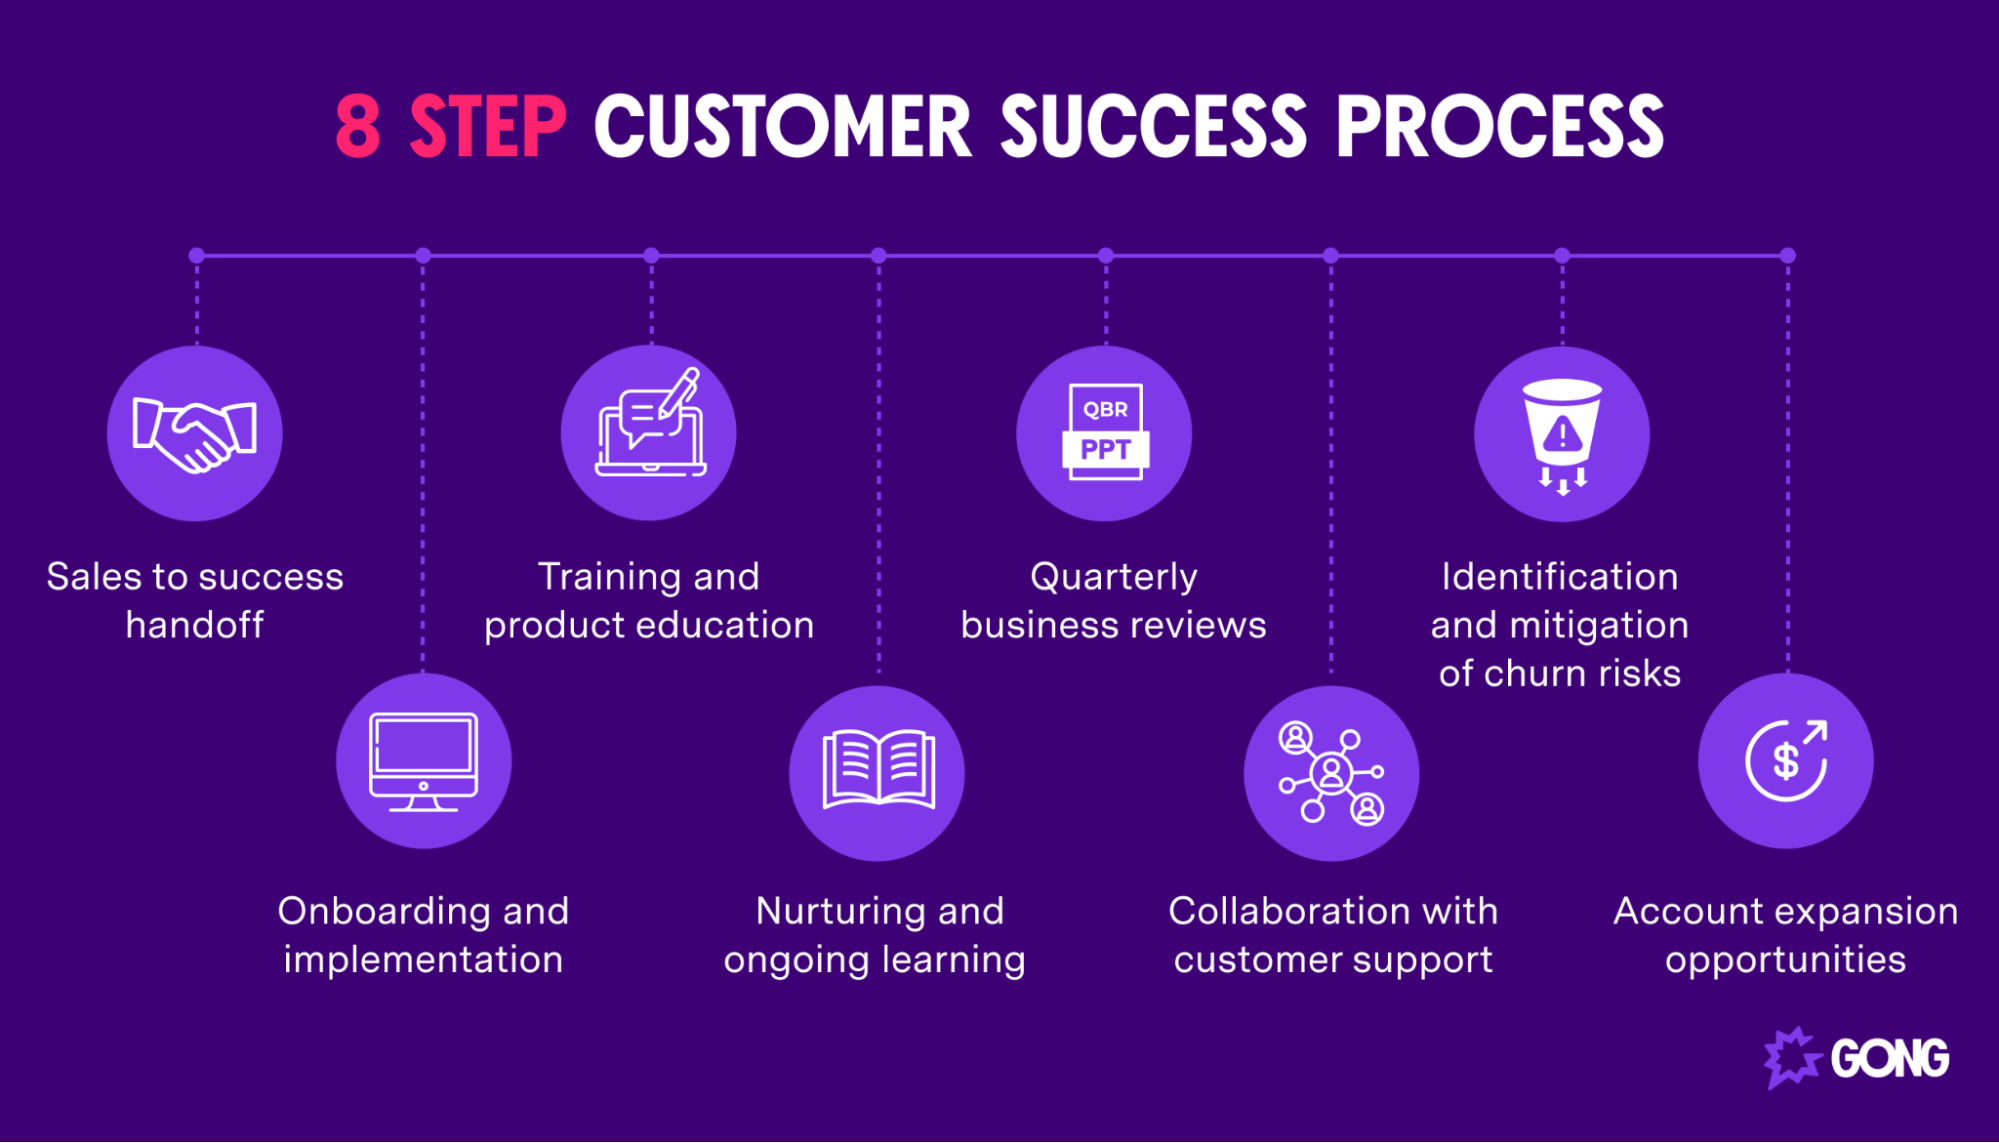 Customer success process in 8 steps